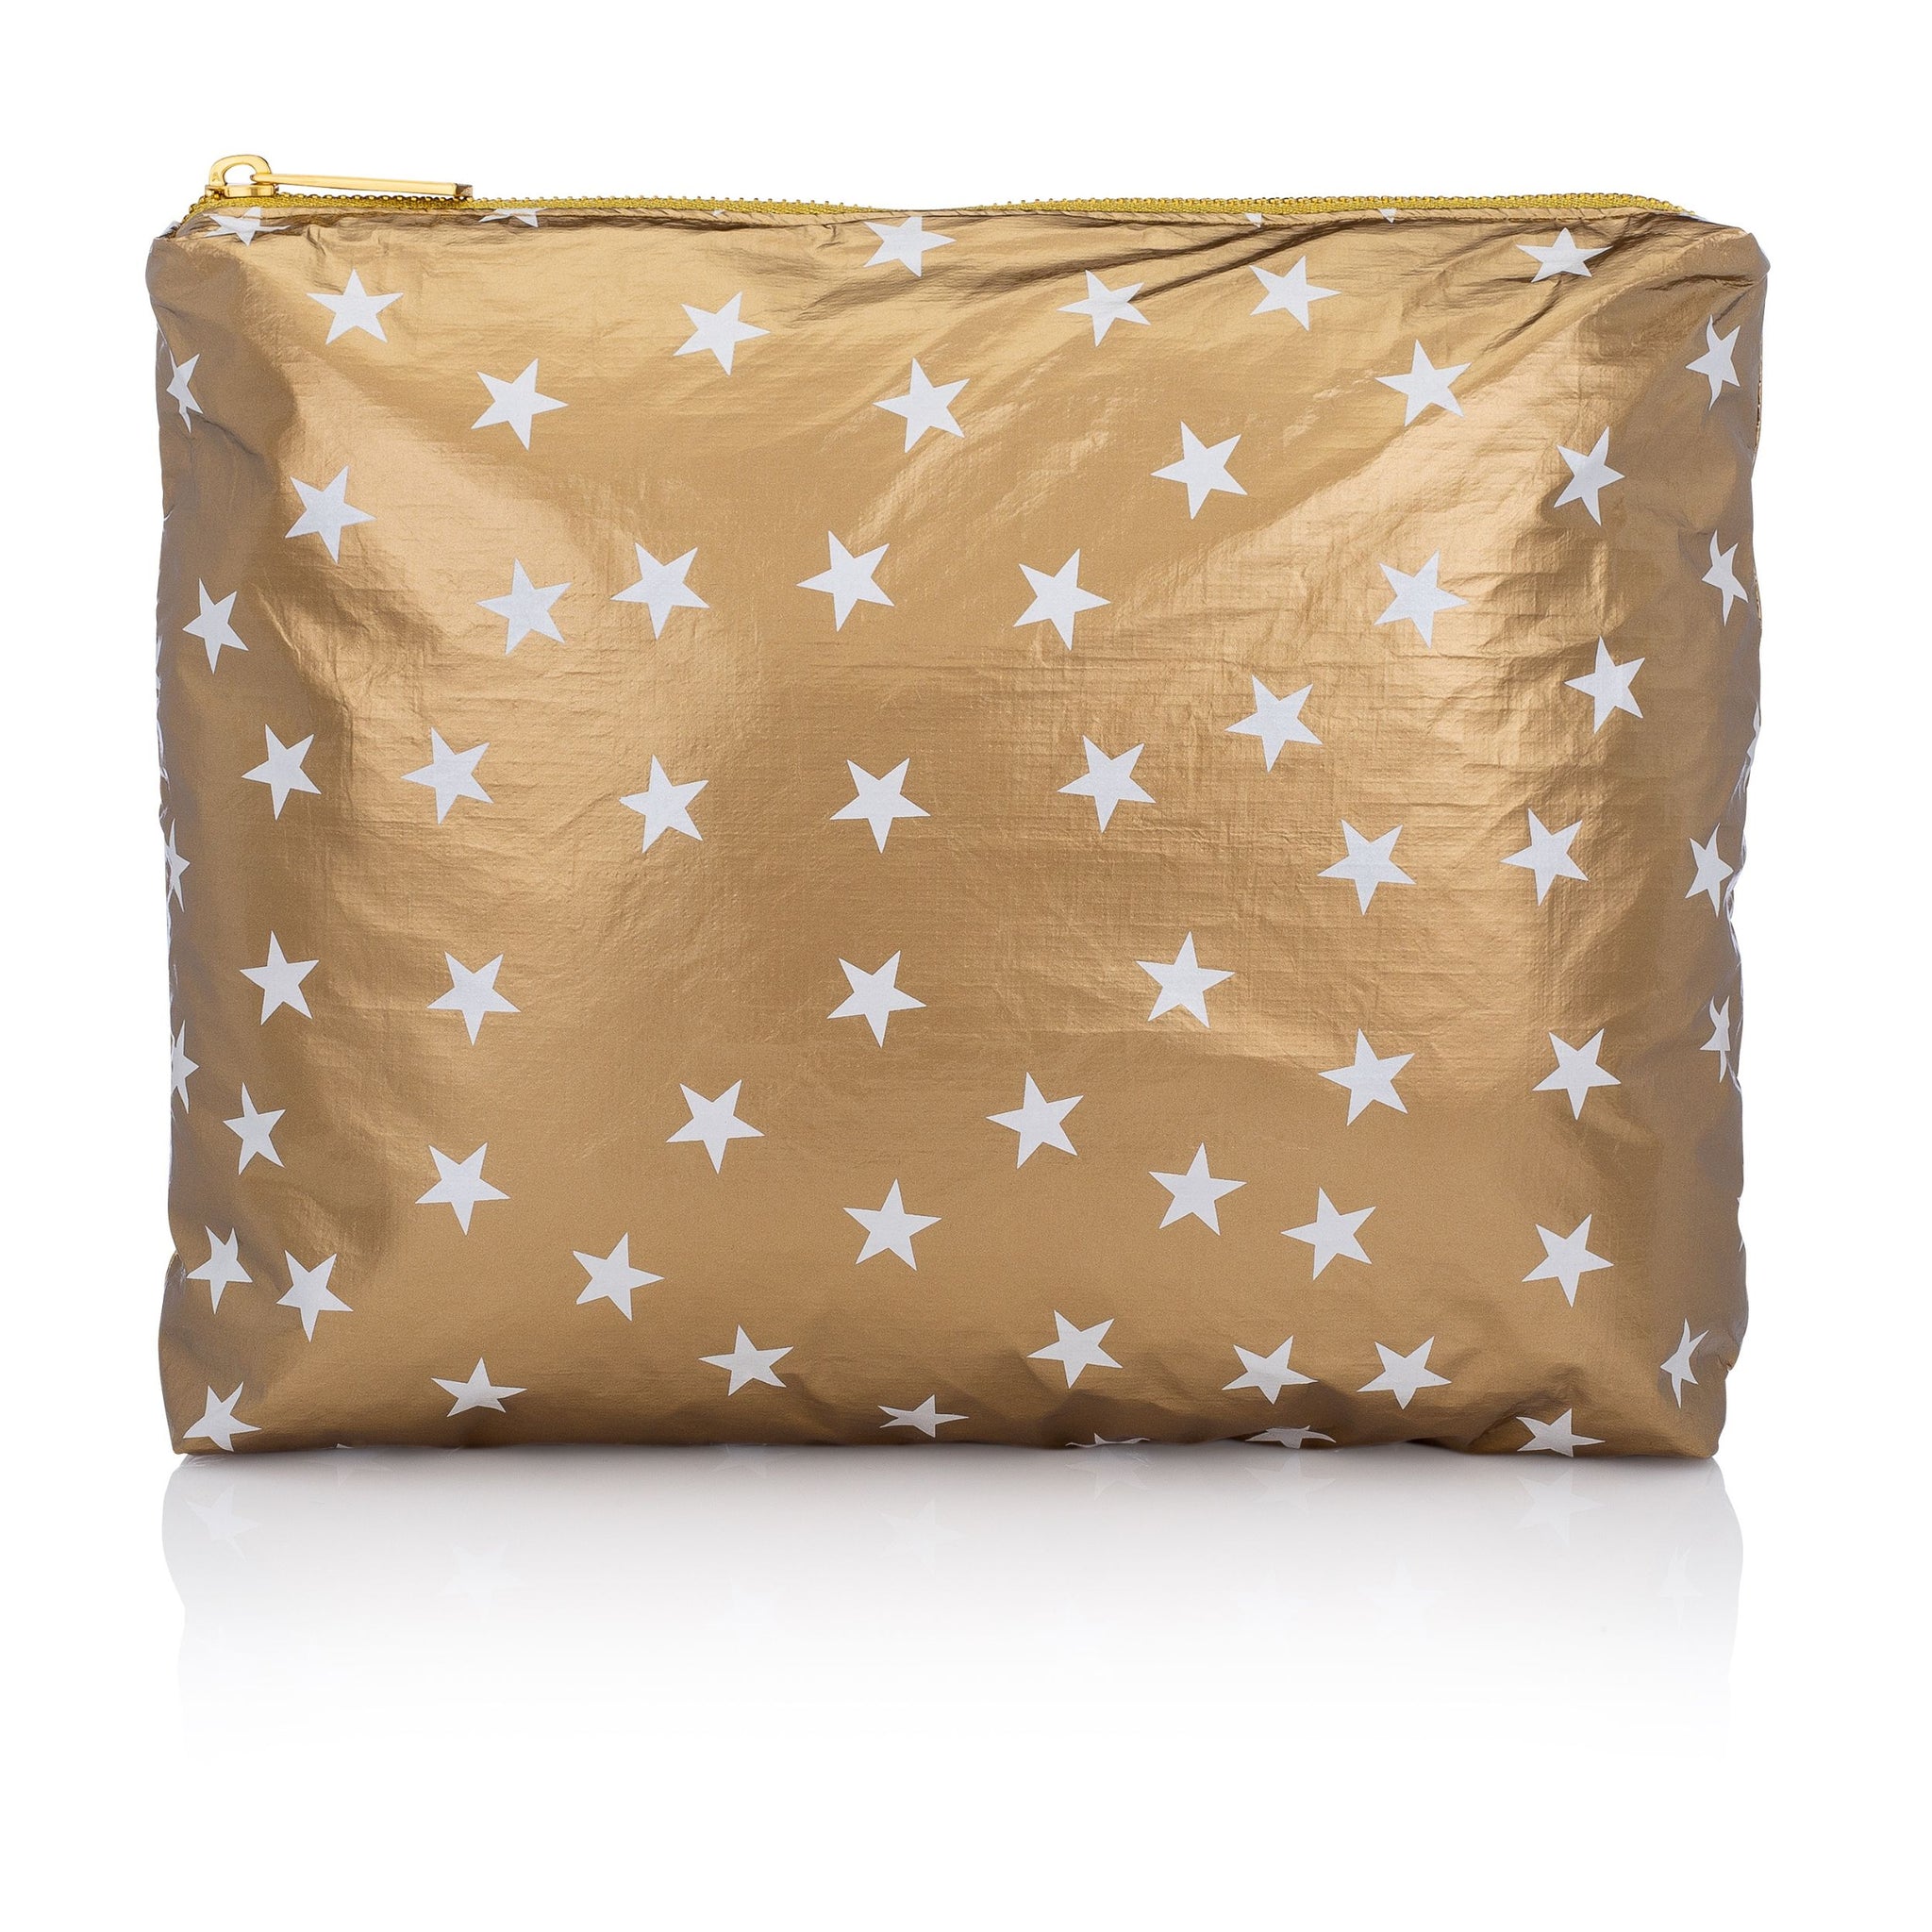 Medium zipper pack in gold with myriad white stars